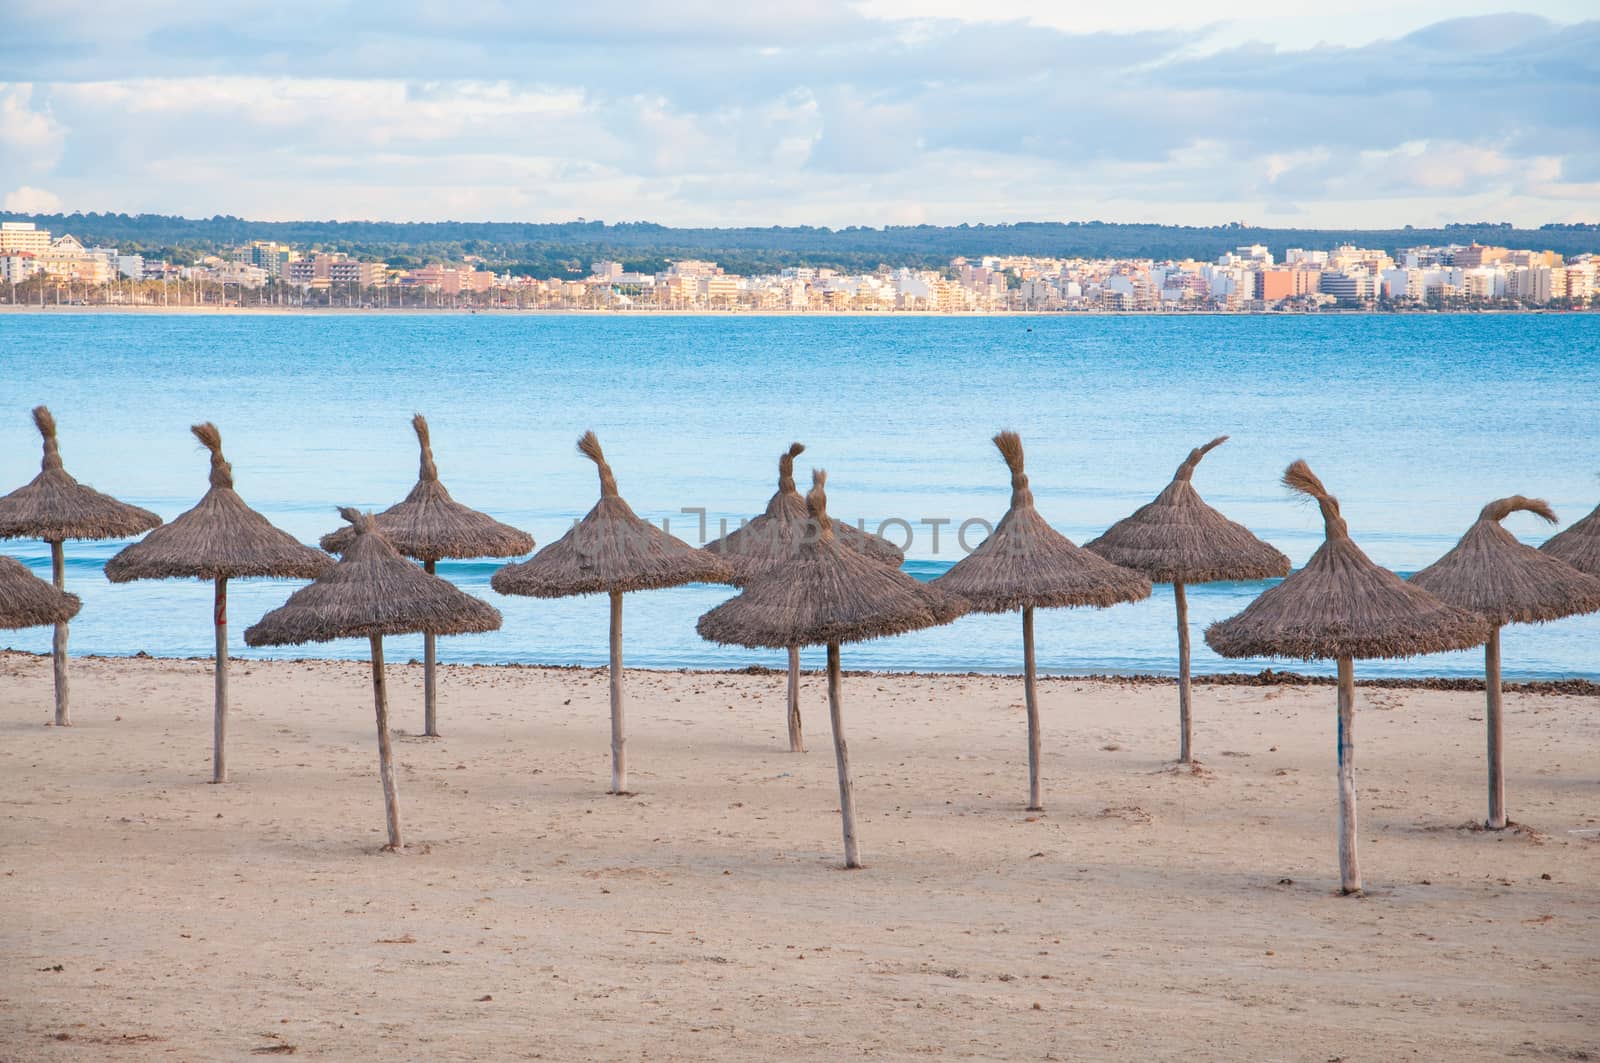 Straw umbrellas on empty beach, Playa de Palma, Majorca, Balearic islands, Spain in February.